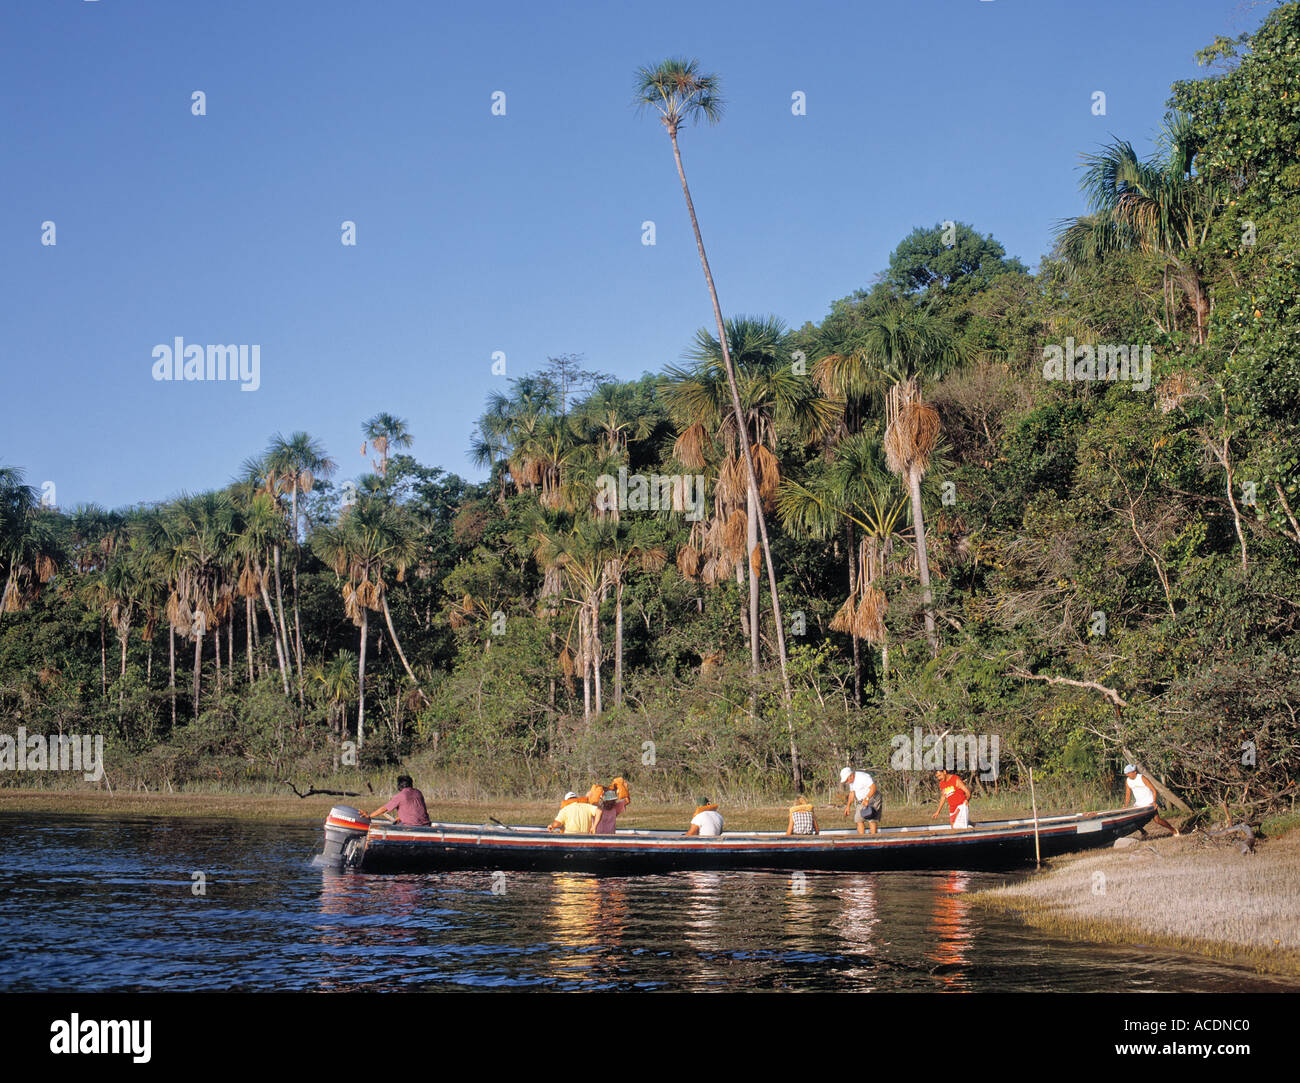 Canaima National Park Bolivar State Venezuela Tourists boarding Canoe in Canaima lagoon Stock Photo